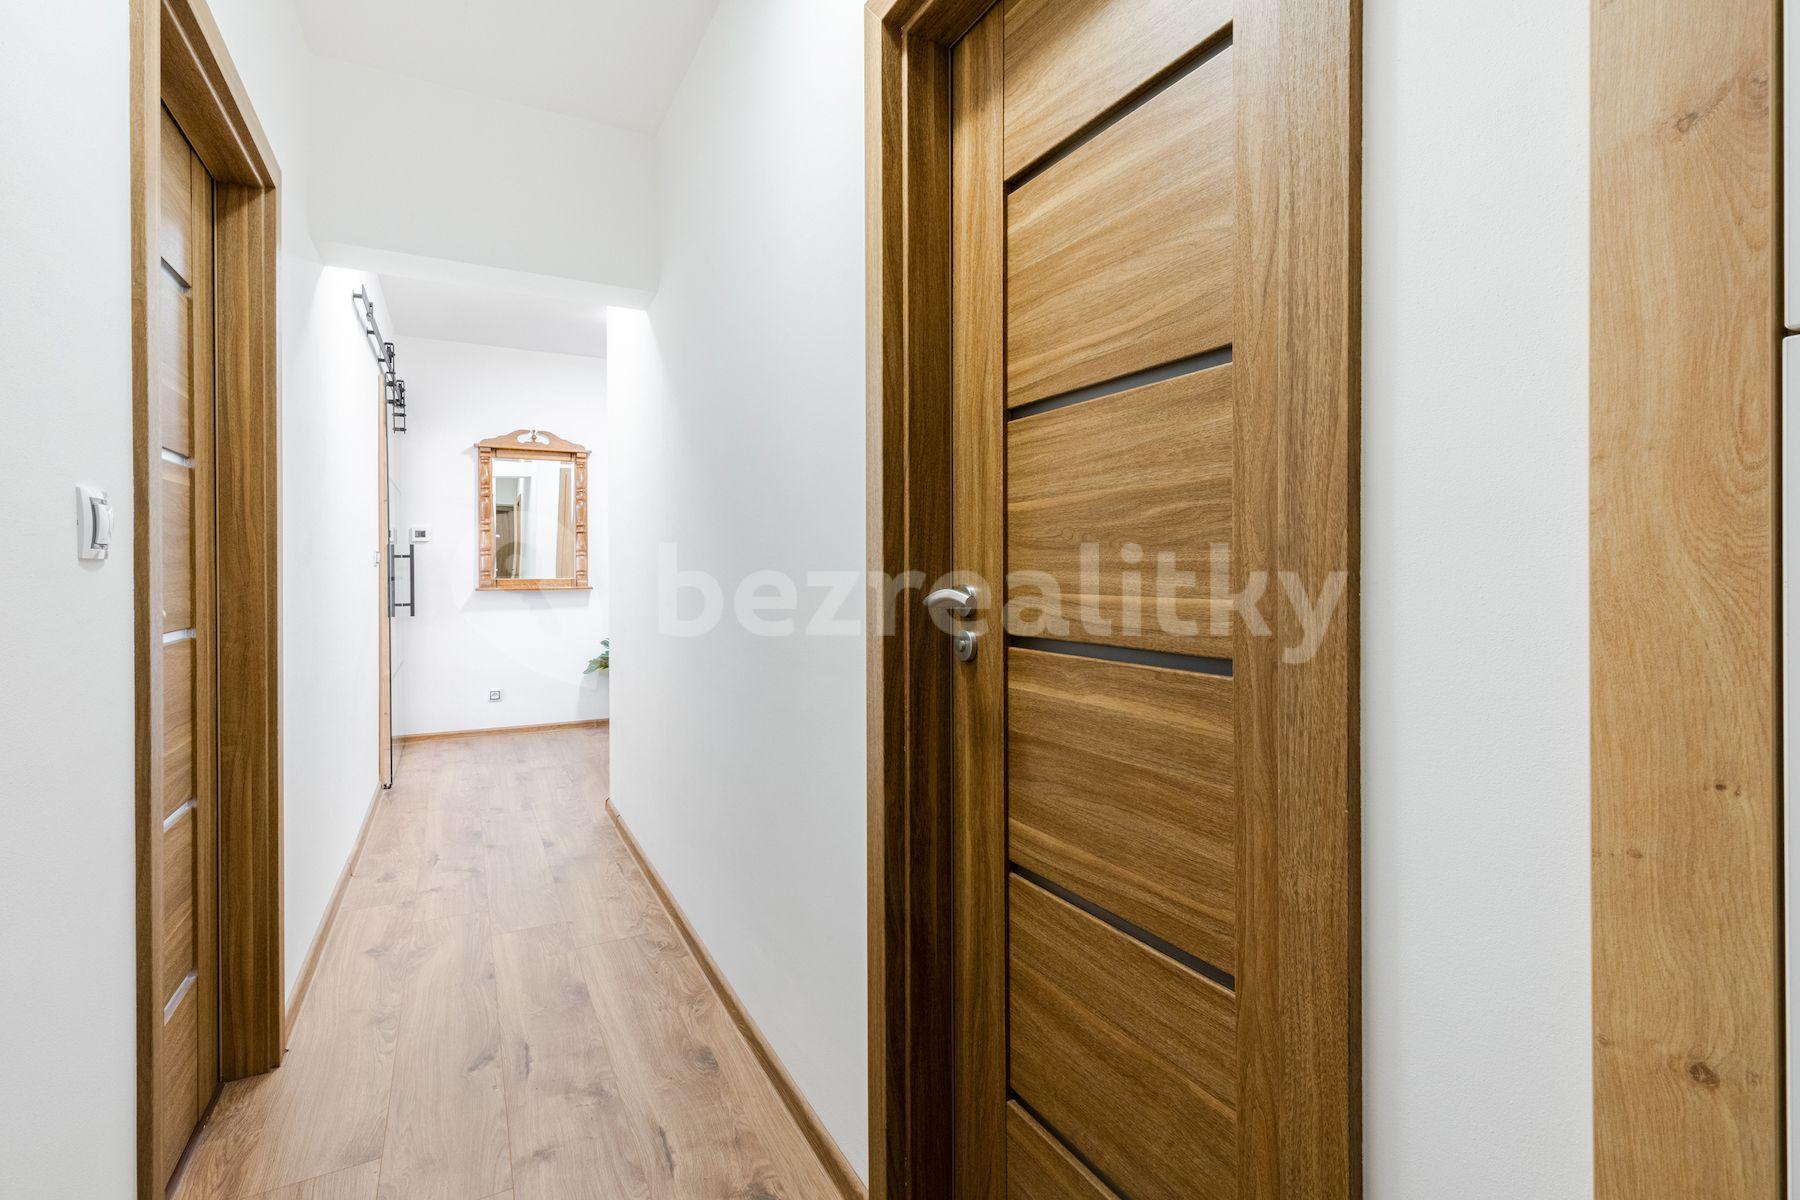 2 bedroom with open-plan kitchen flat for sale, 120 m², Albrechtice nad Vltavou, Jihočeský Region